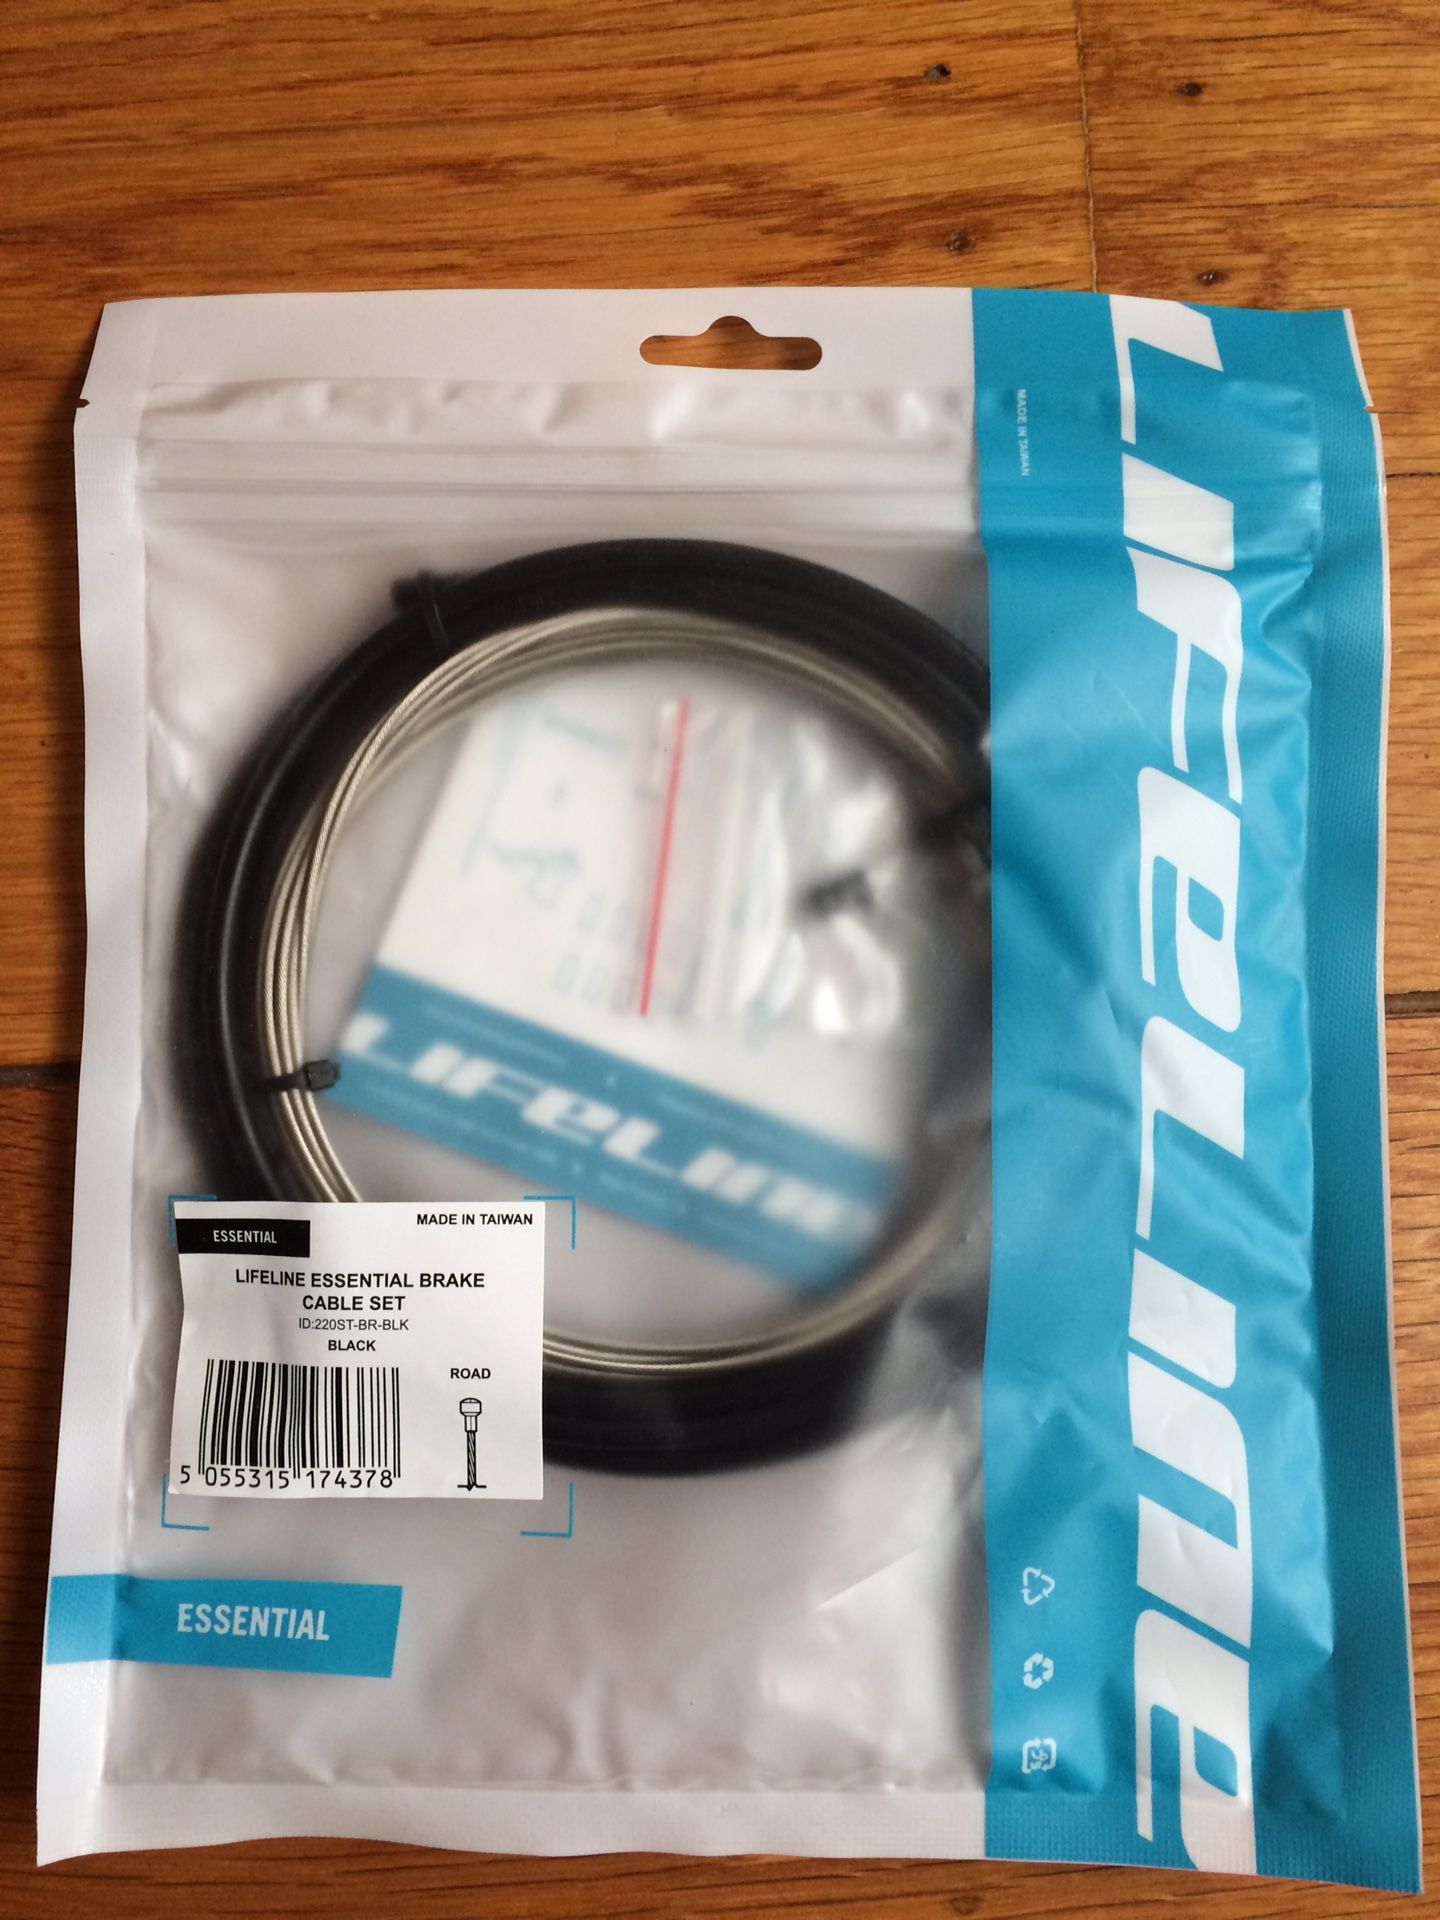 Lifeline Essential Brake Cable Set